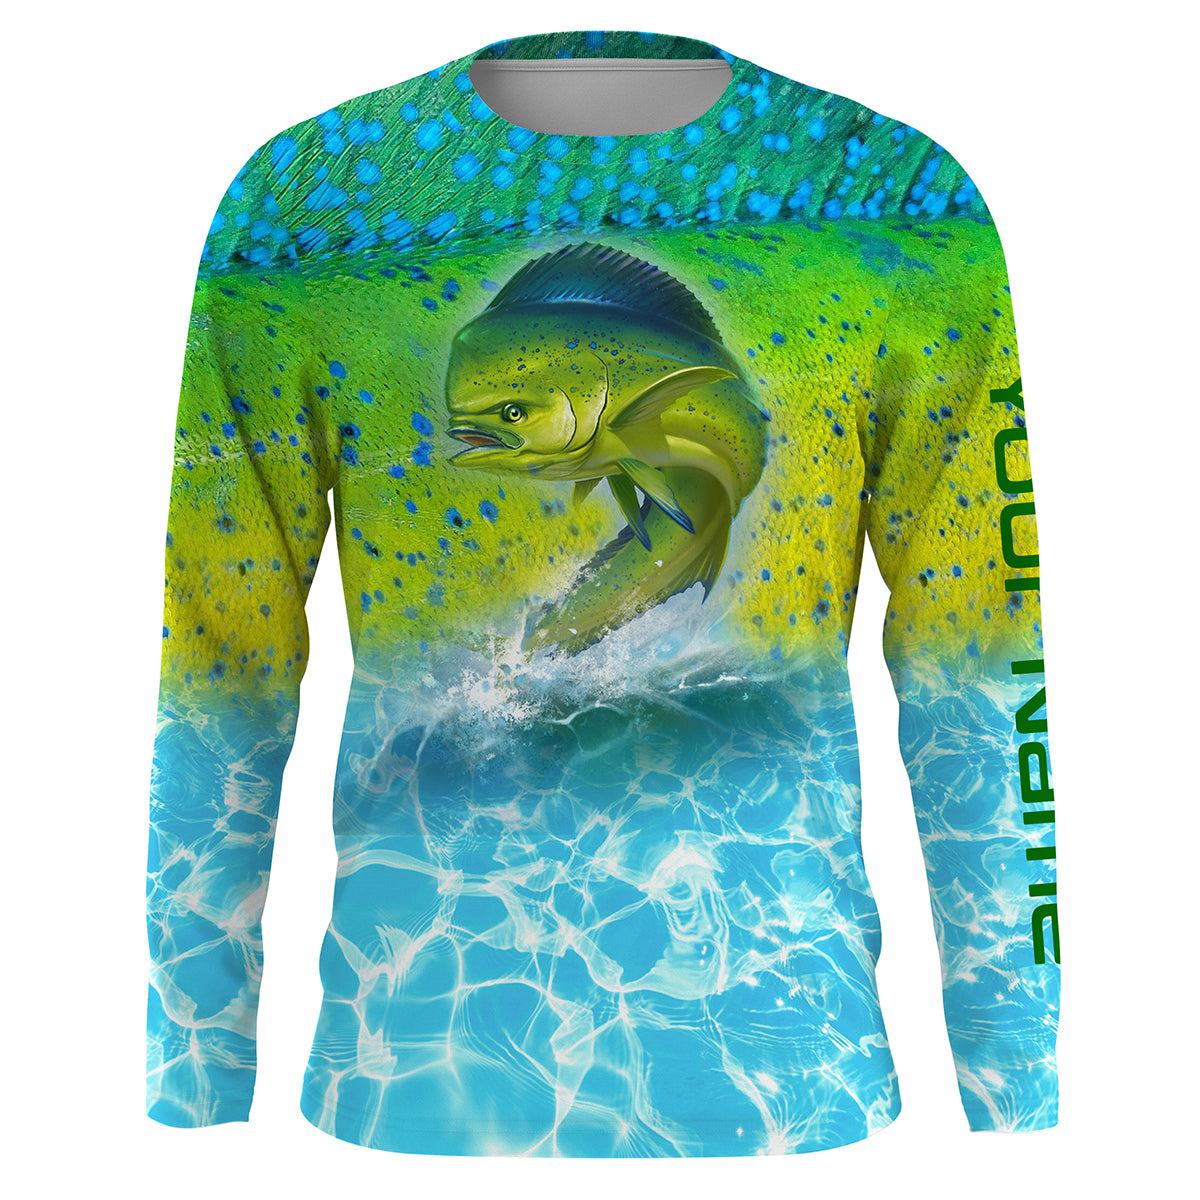 Saltwater Life T-Shirt – Fishing Shirts – Teezou Store